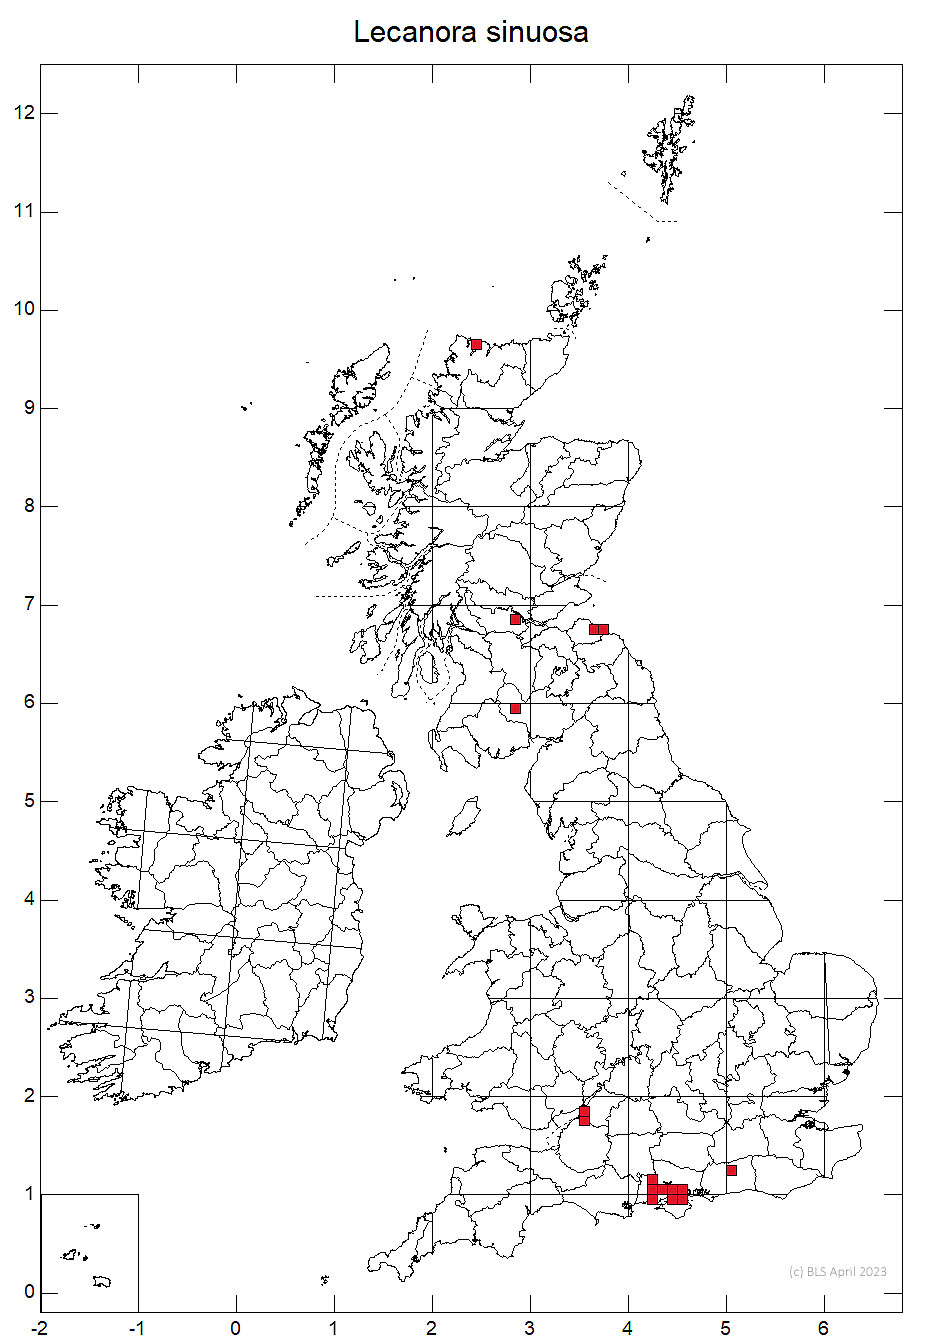 Lecanora sinuosa 10km sq distribution map